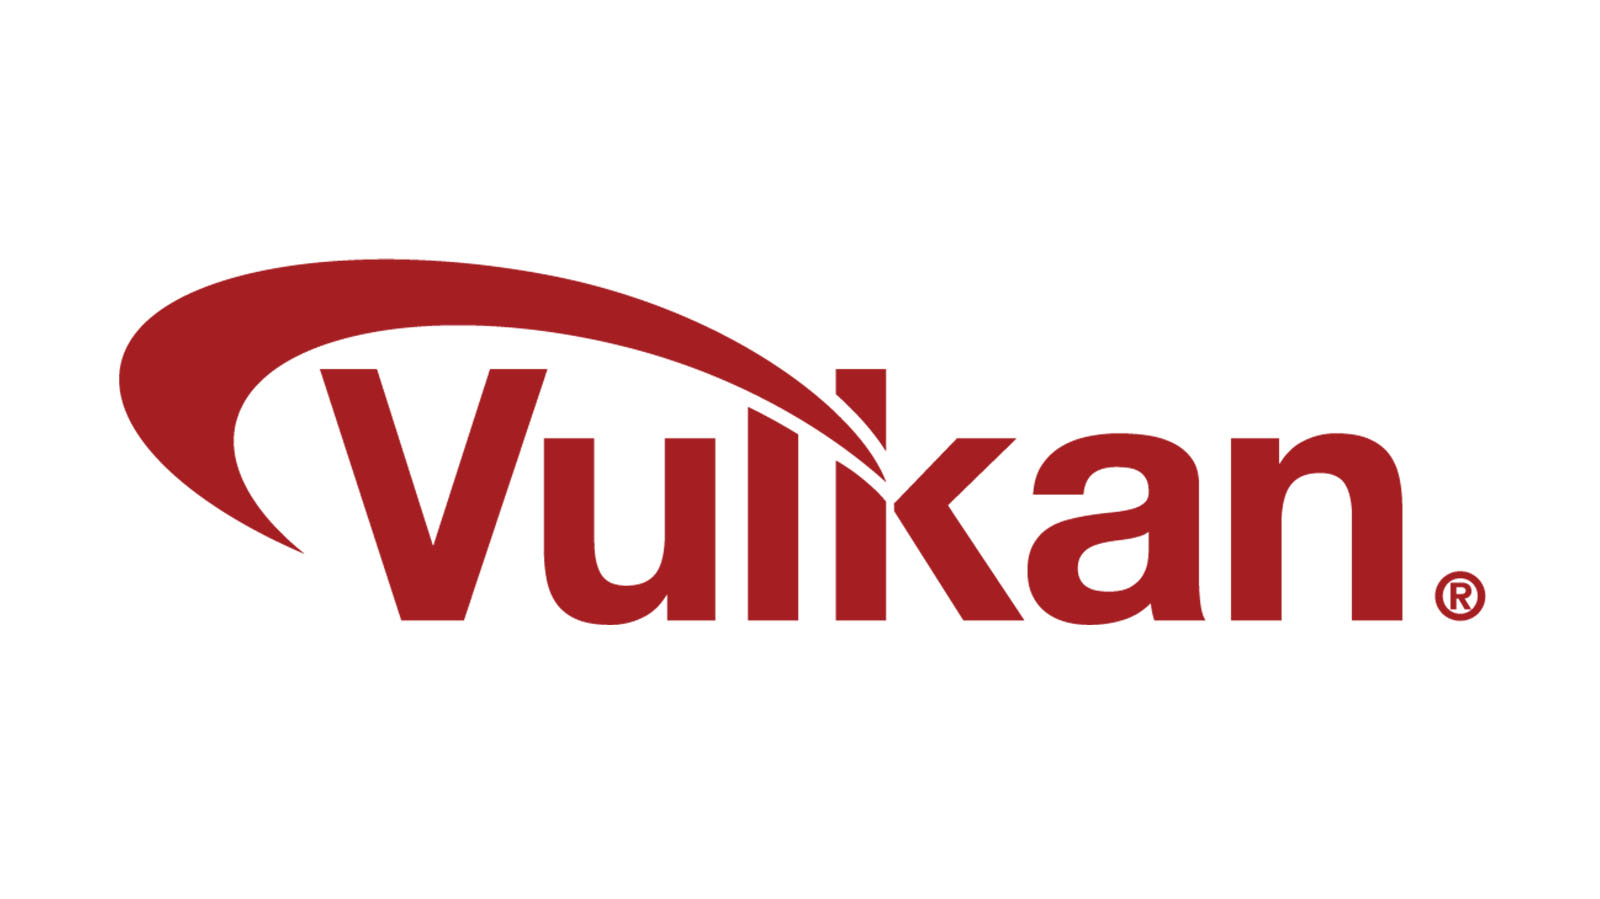 Vulkan graphics and compute open-standard API